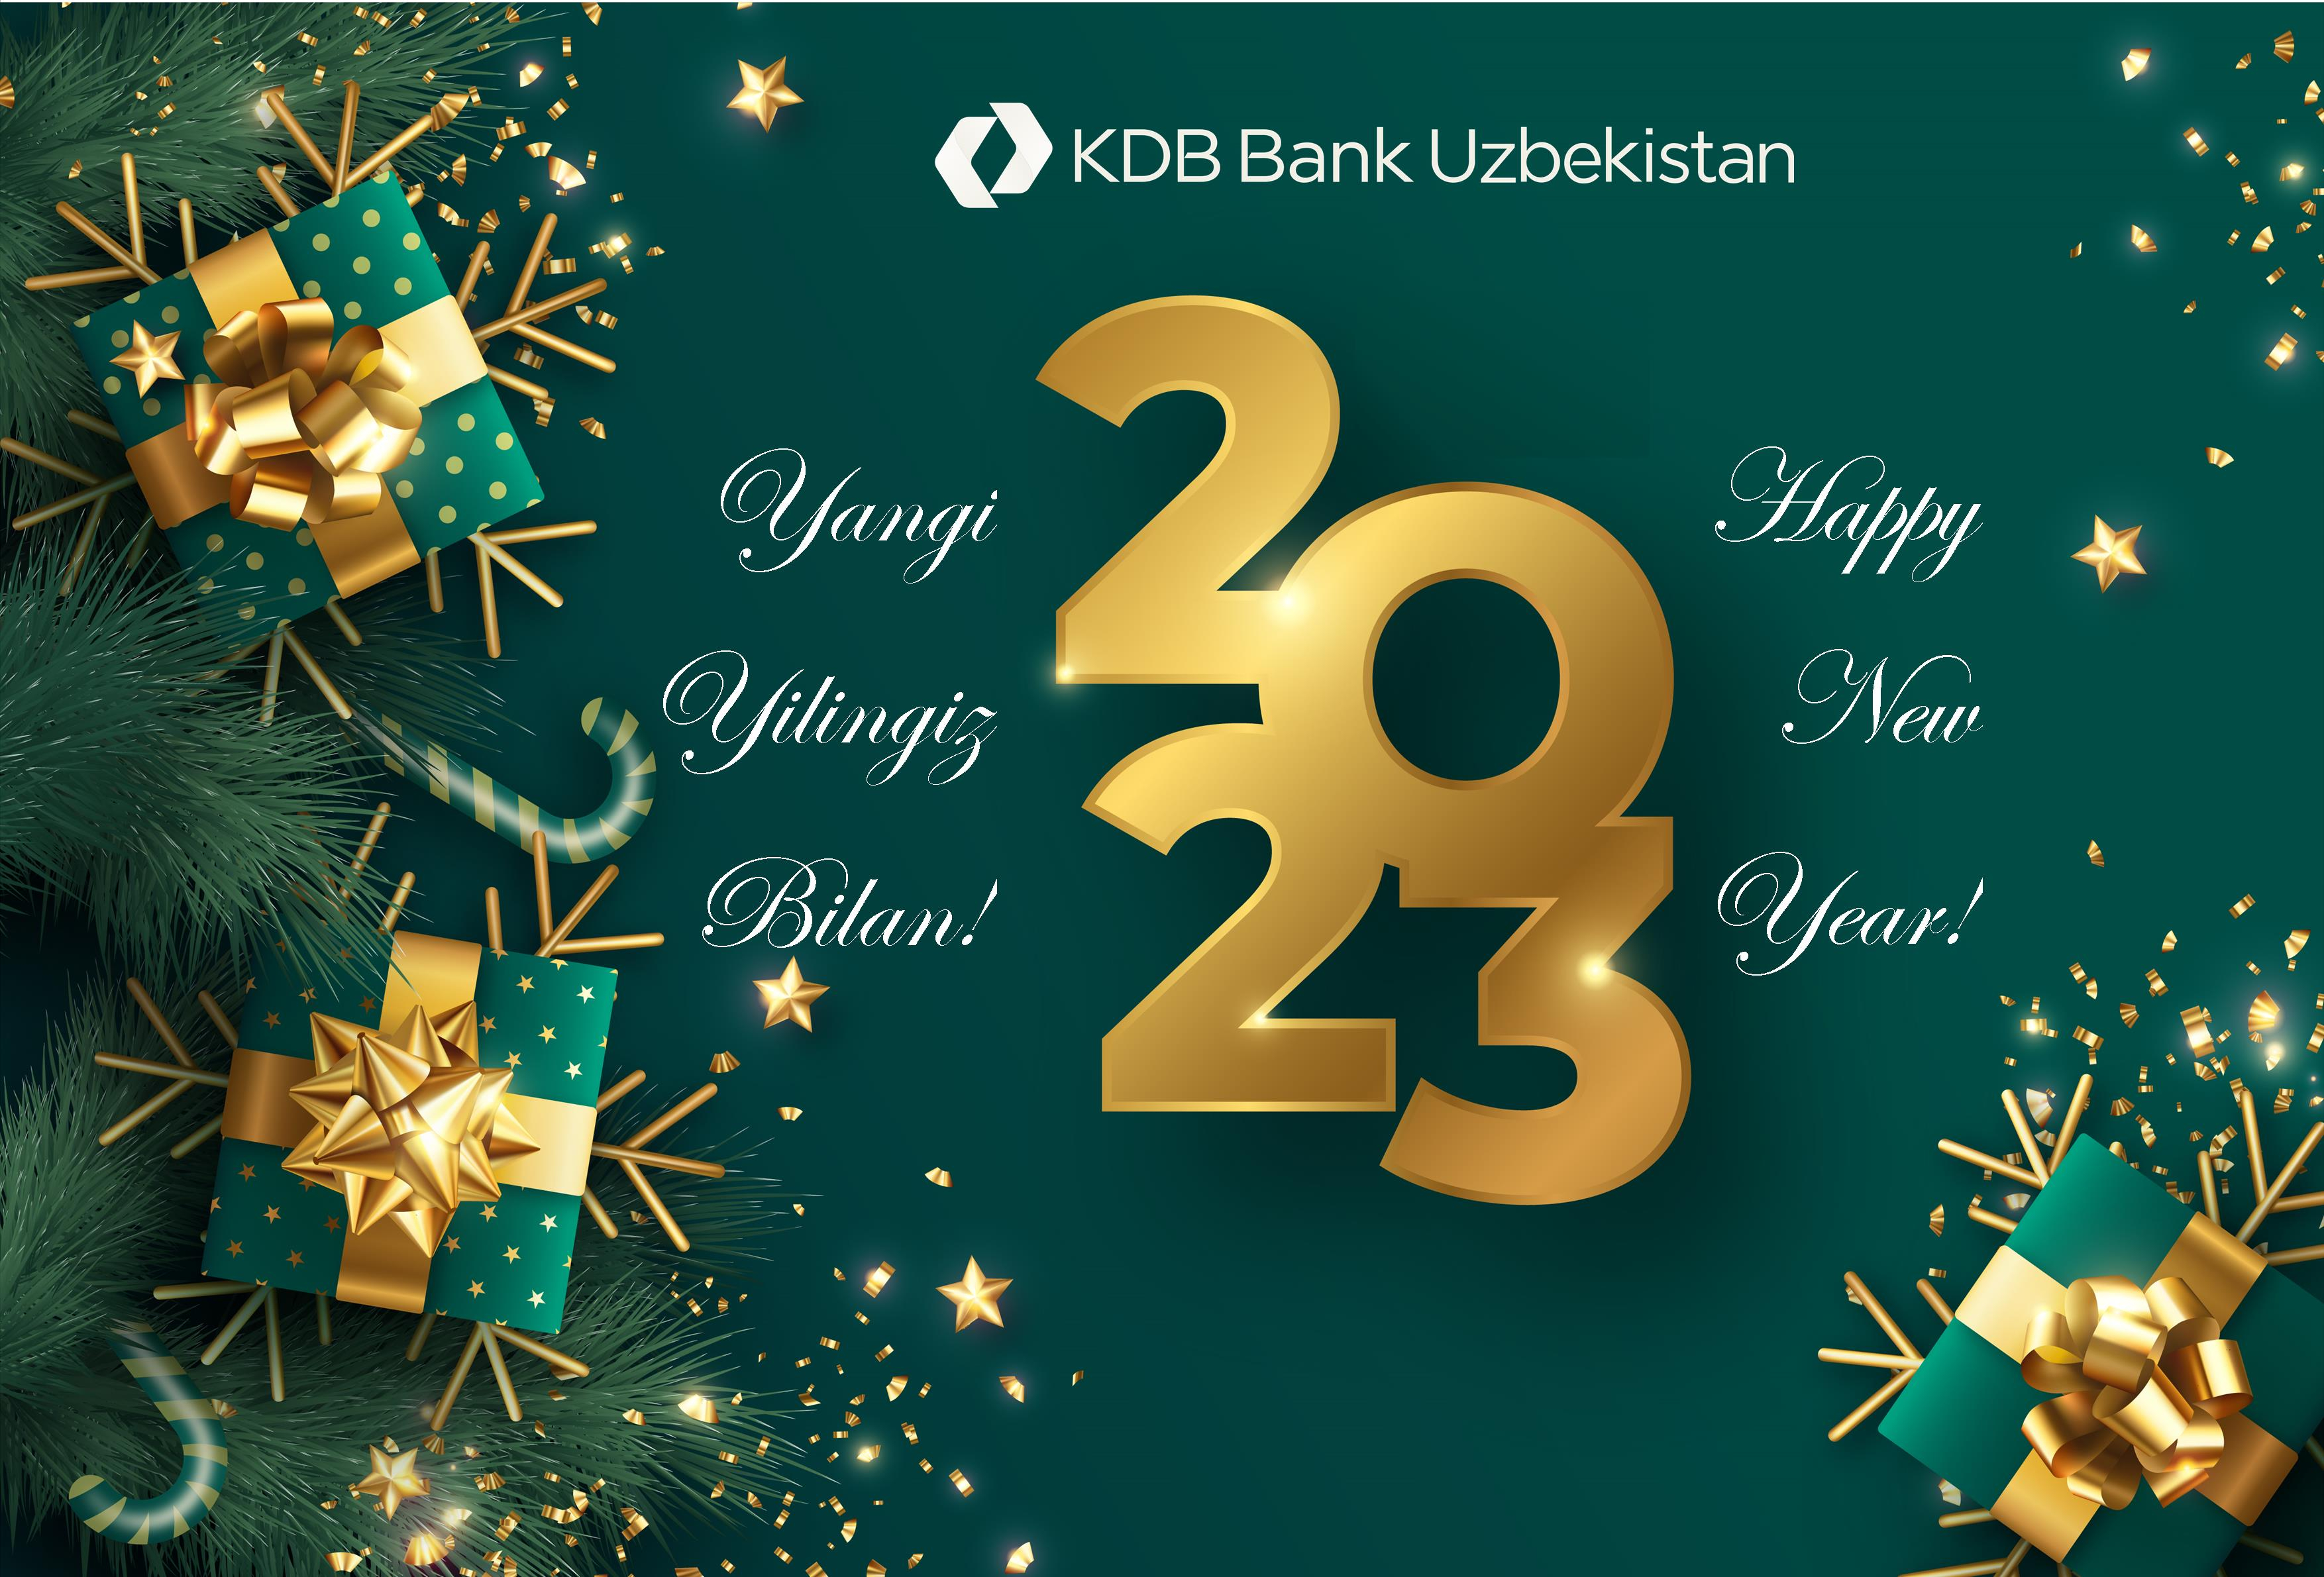 JSC “KDB Bank Uzbekistan” wishes you a Happy New Year!